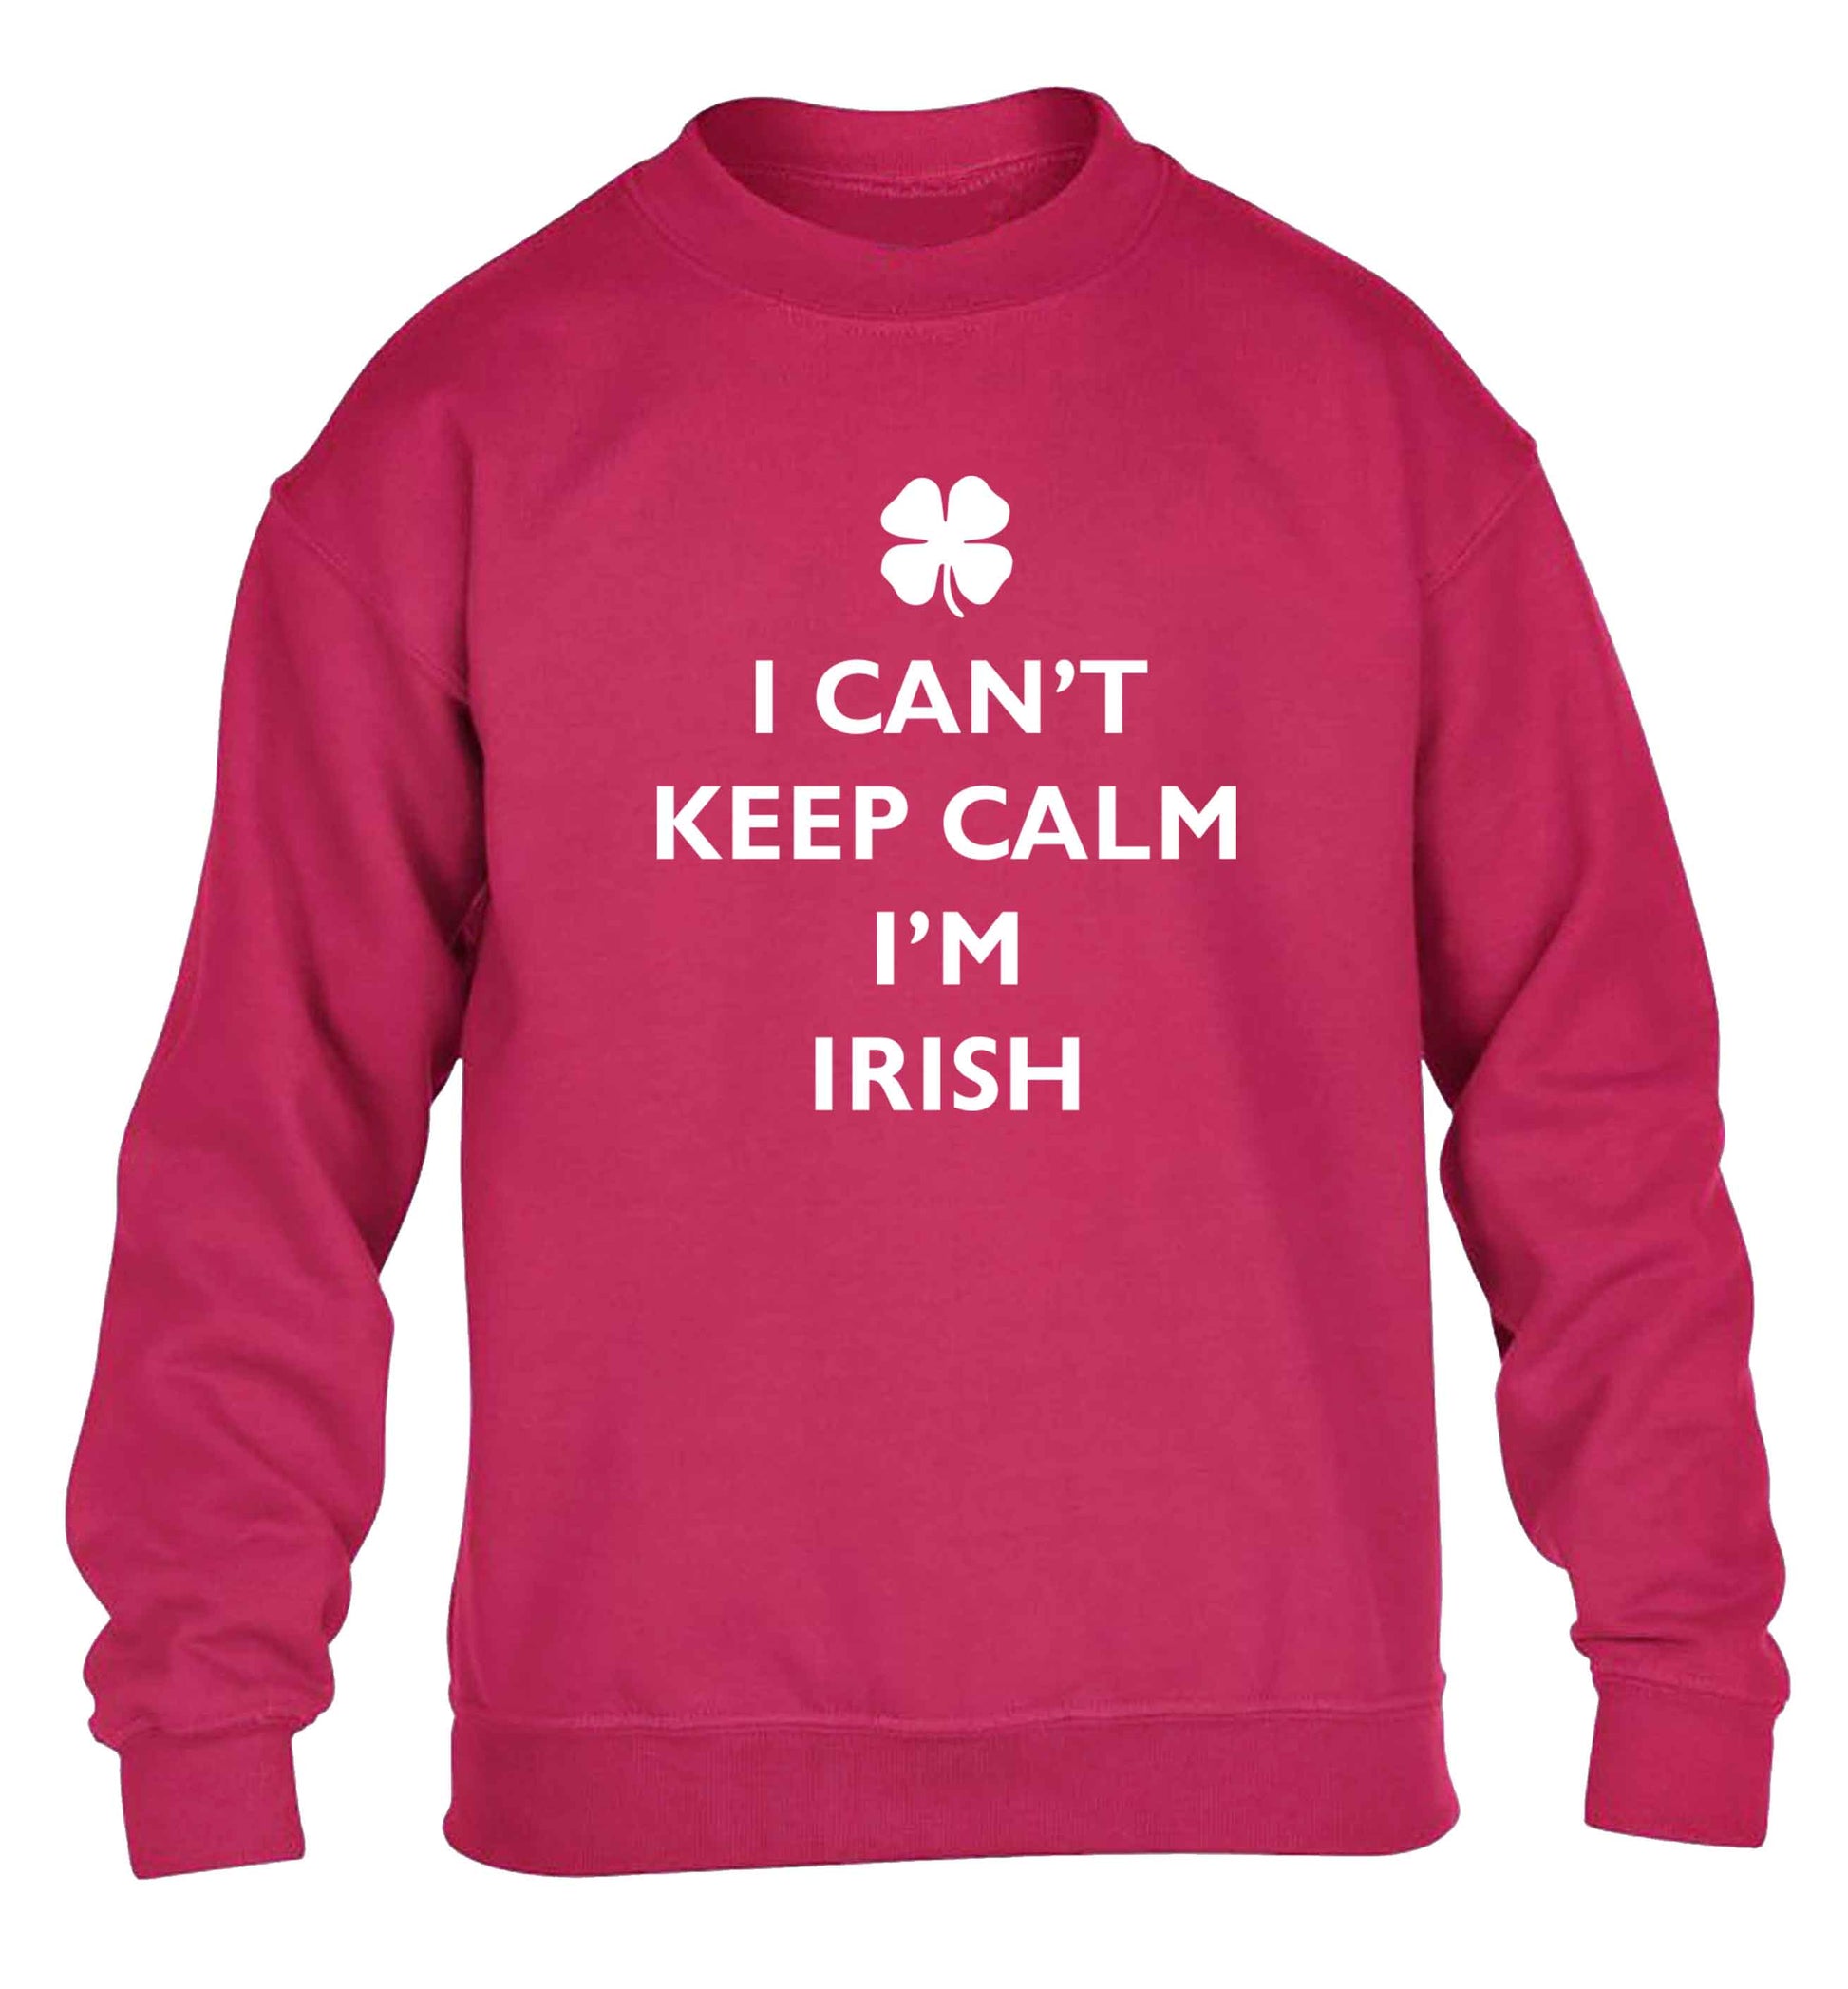 I can't keep calm I'm Irish children's pink sweater 12-13 Years